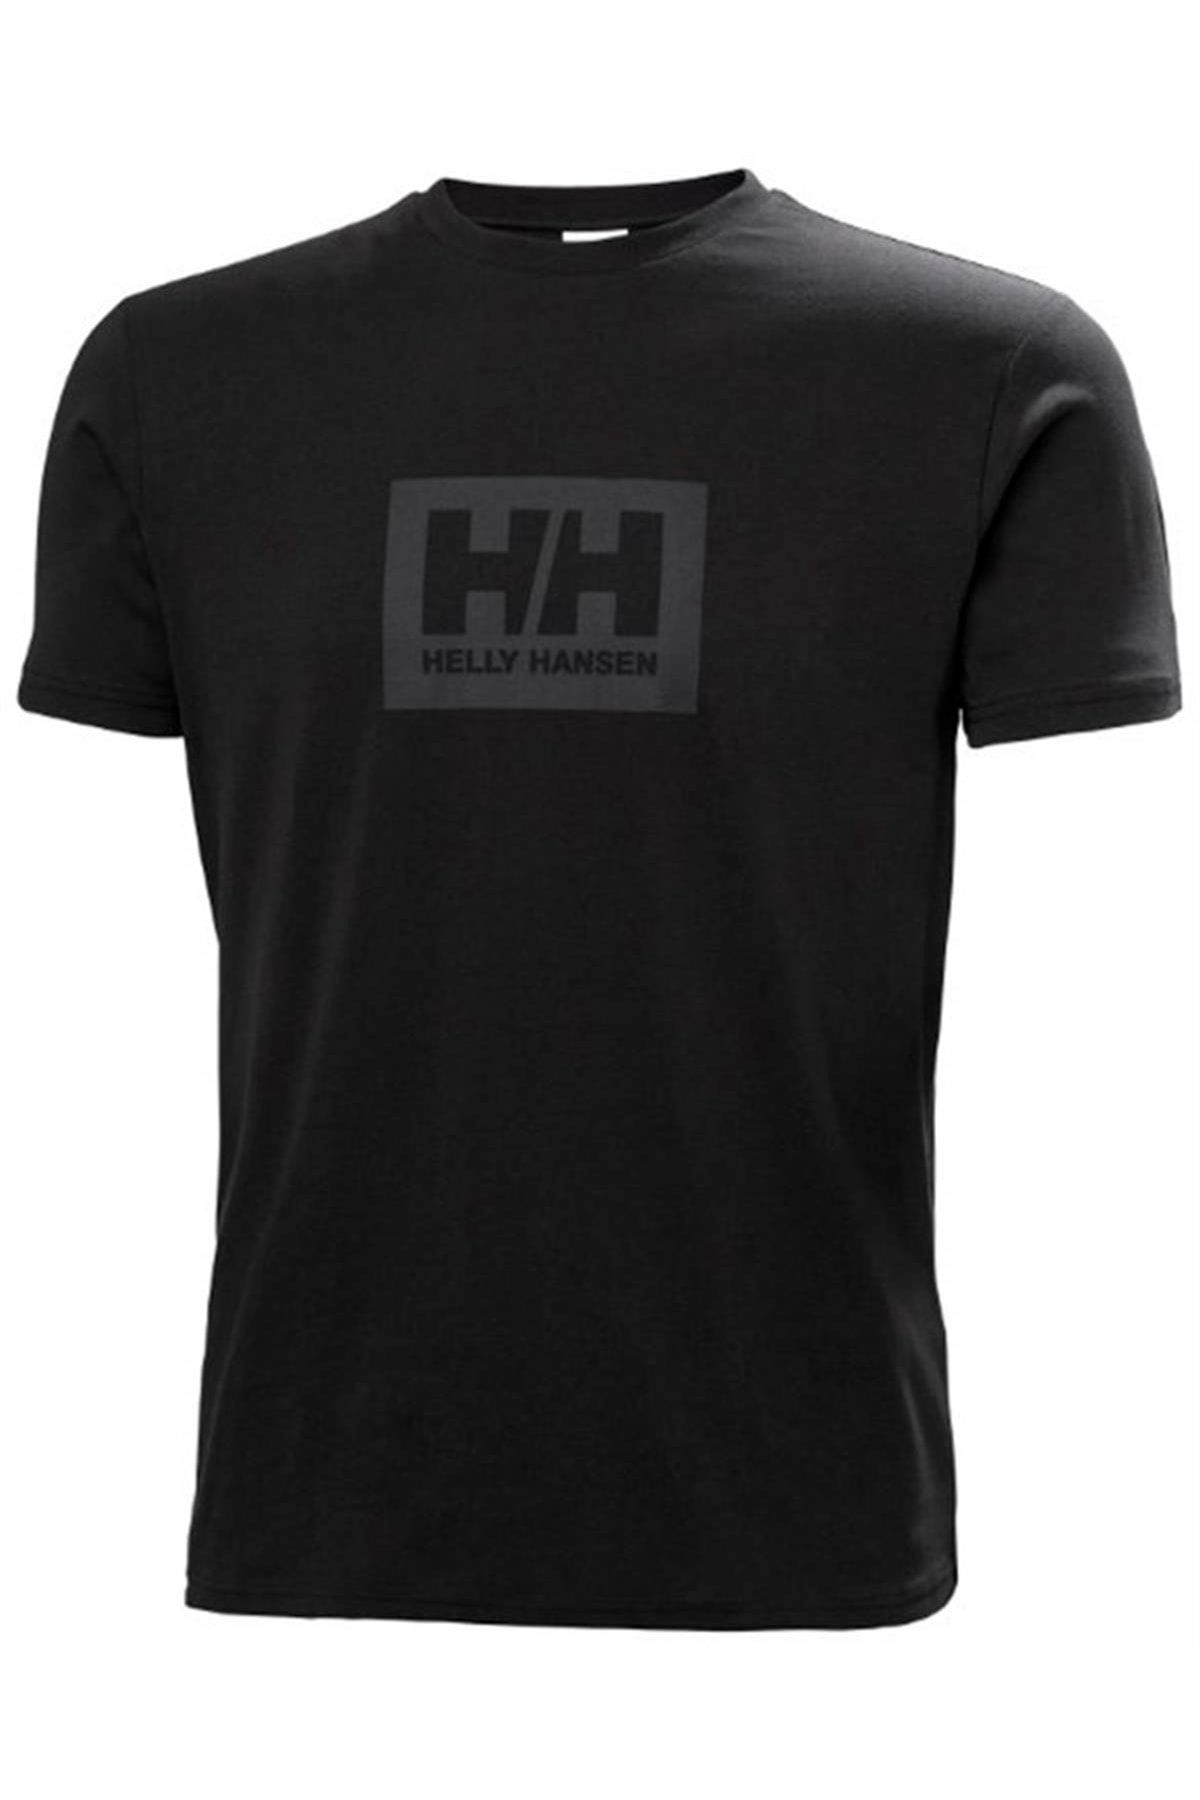 Helly Hansen Hh Box T Erkek T-shirt Hha.53285 Hha.162